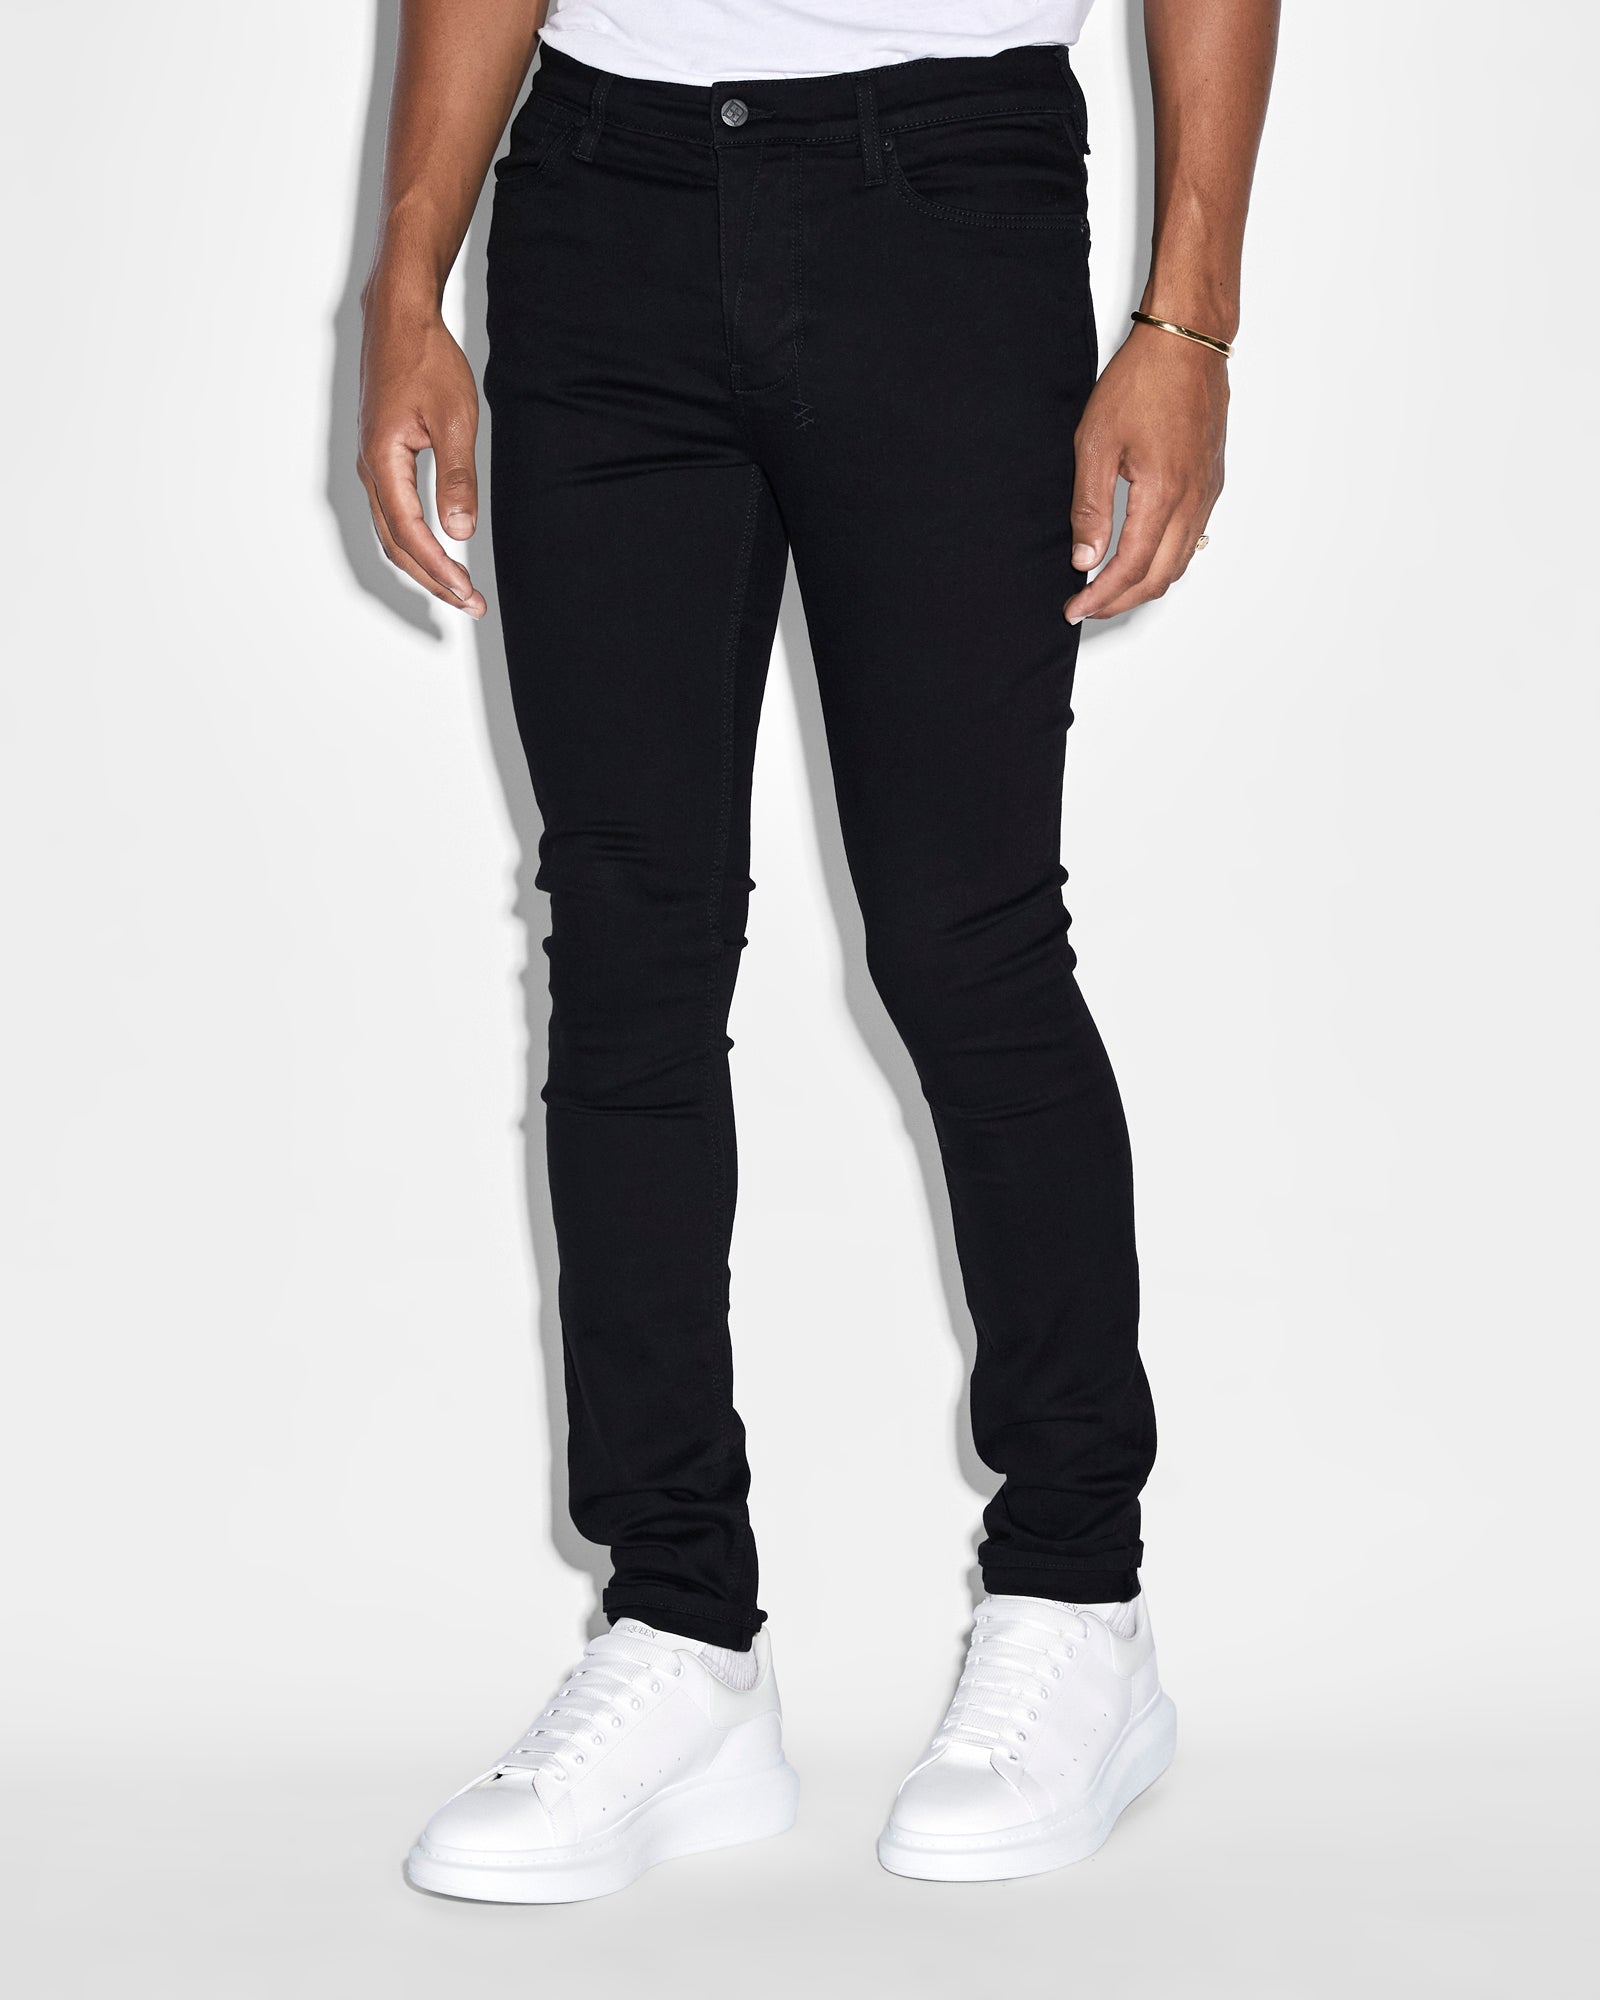 Men's Classic Black Jeans Elastic Slim Fit Denim Jean Trousers Male Plus Size  40 42 44